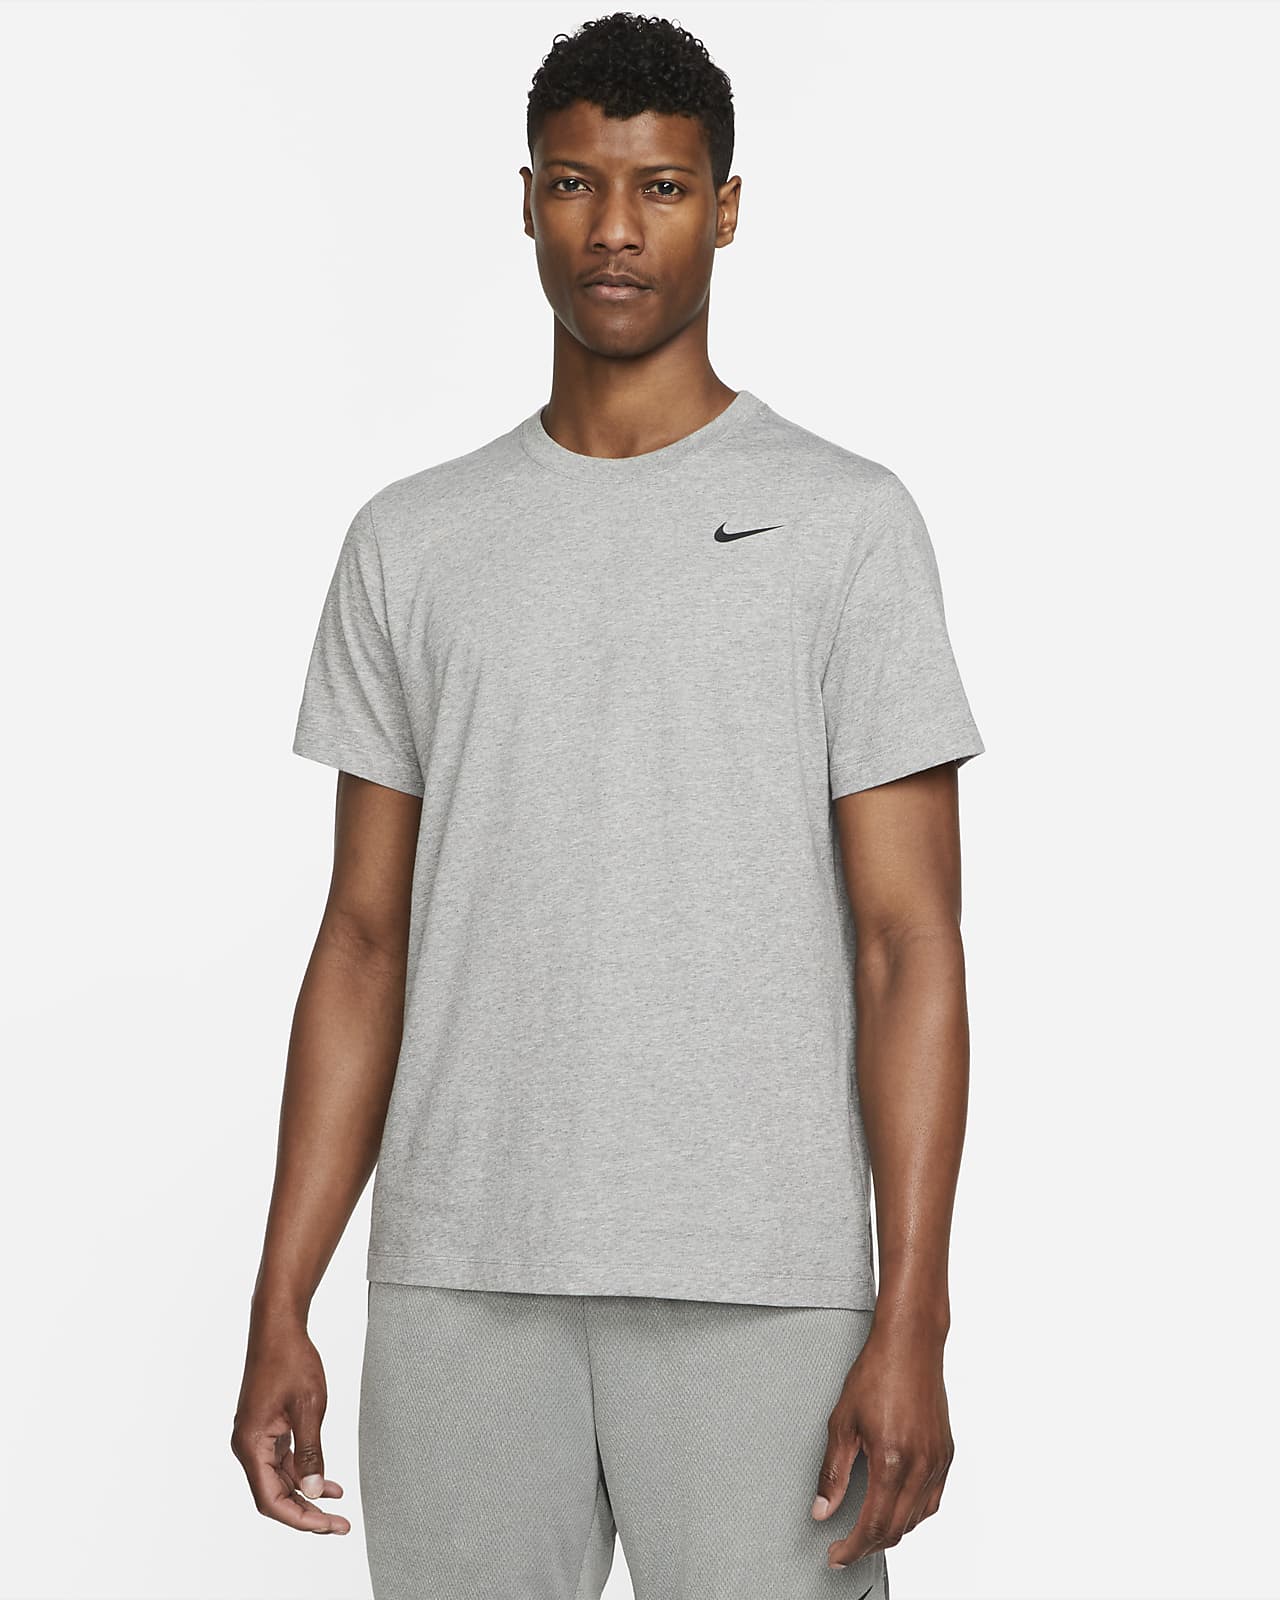 kritiker mirakel hø Nike Dri-FIT Men's Fitness T-Shirt. Nike BE